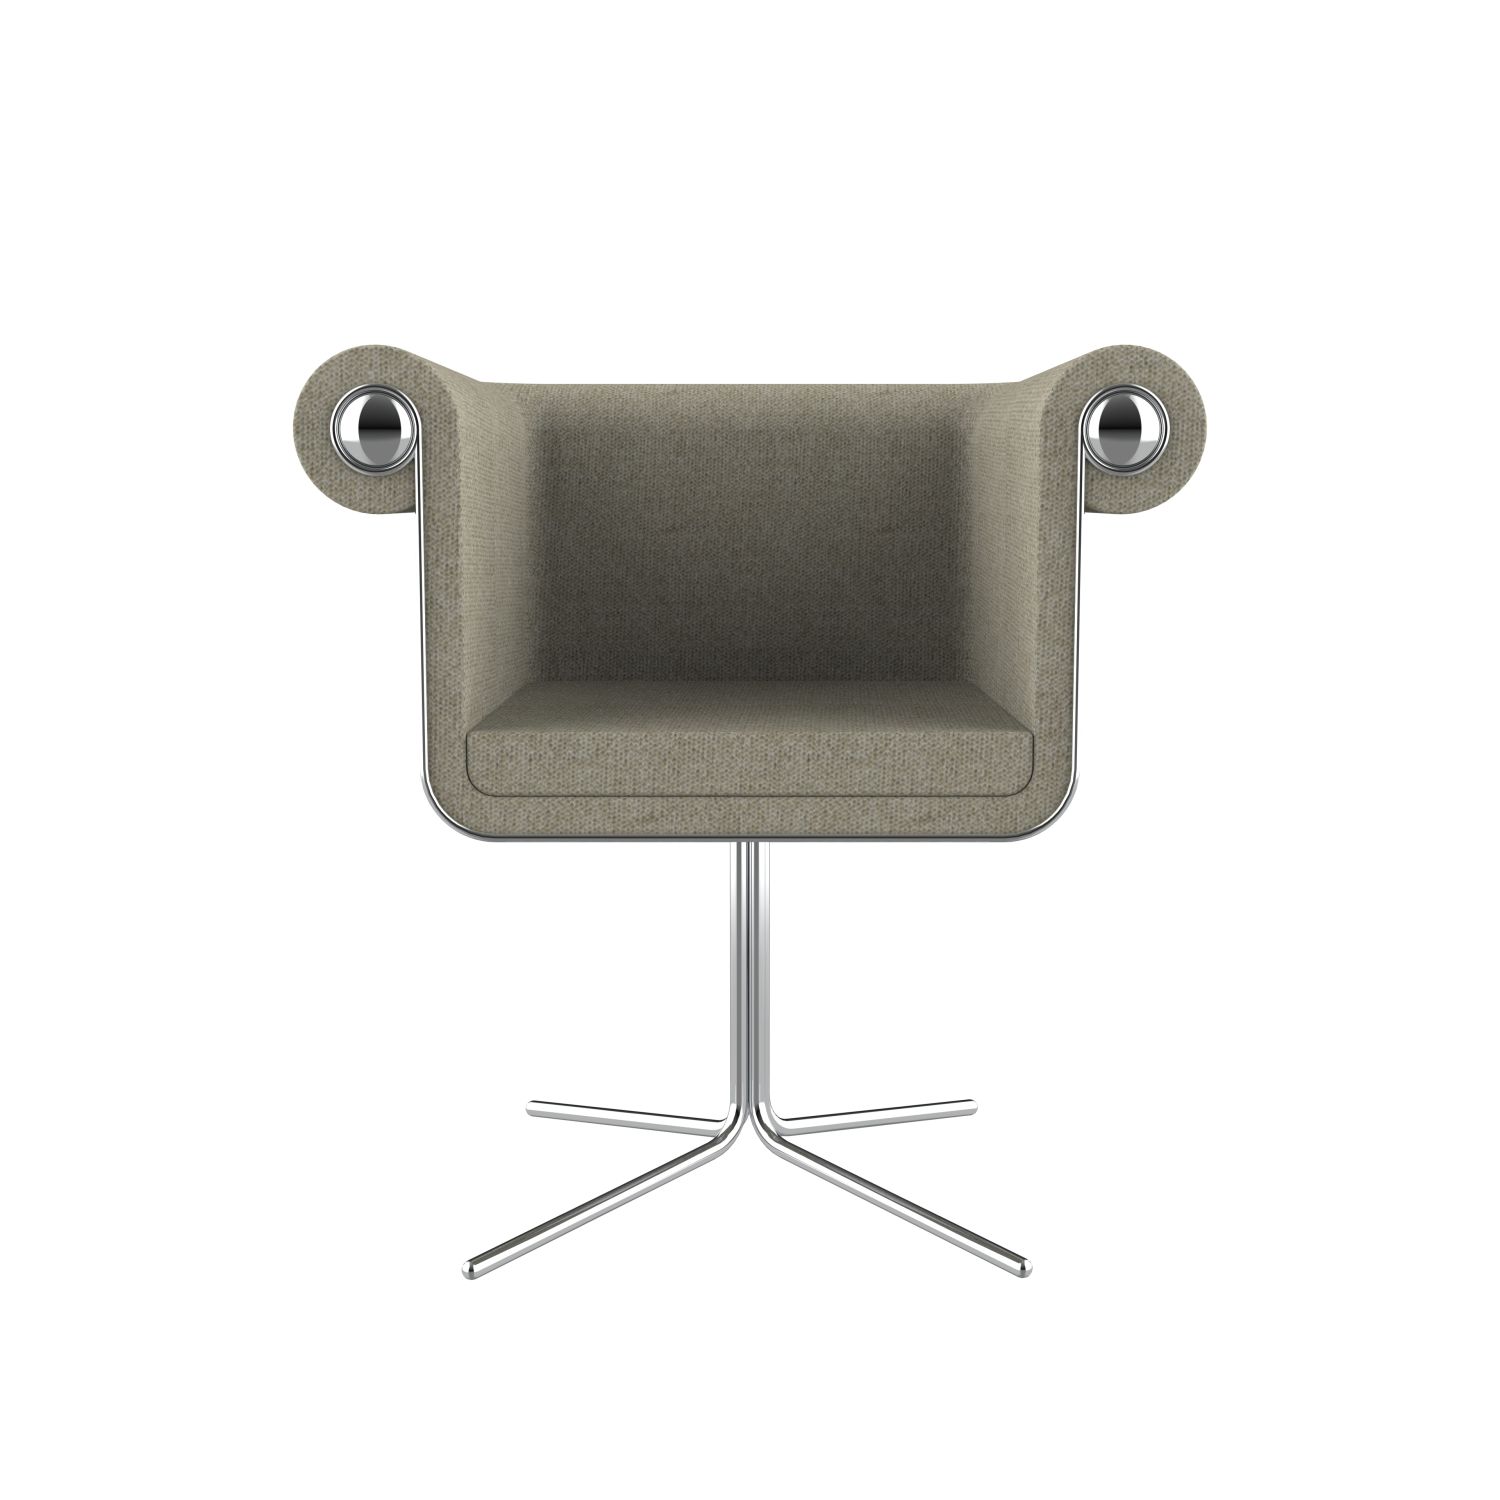 lensvelt baranowitz kronenberg new chesterfield chair moss stone grey 11 price level 2 glossy chrome hard leg ends